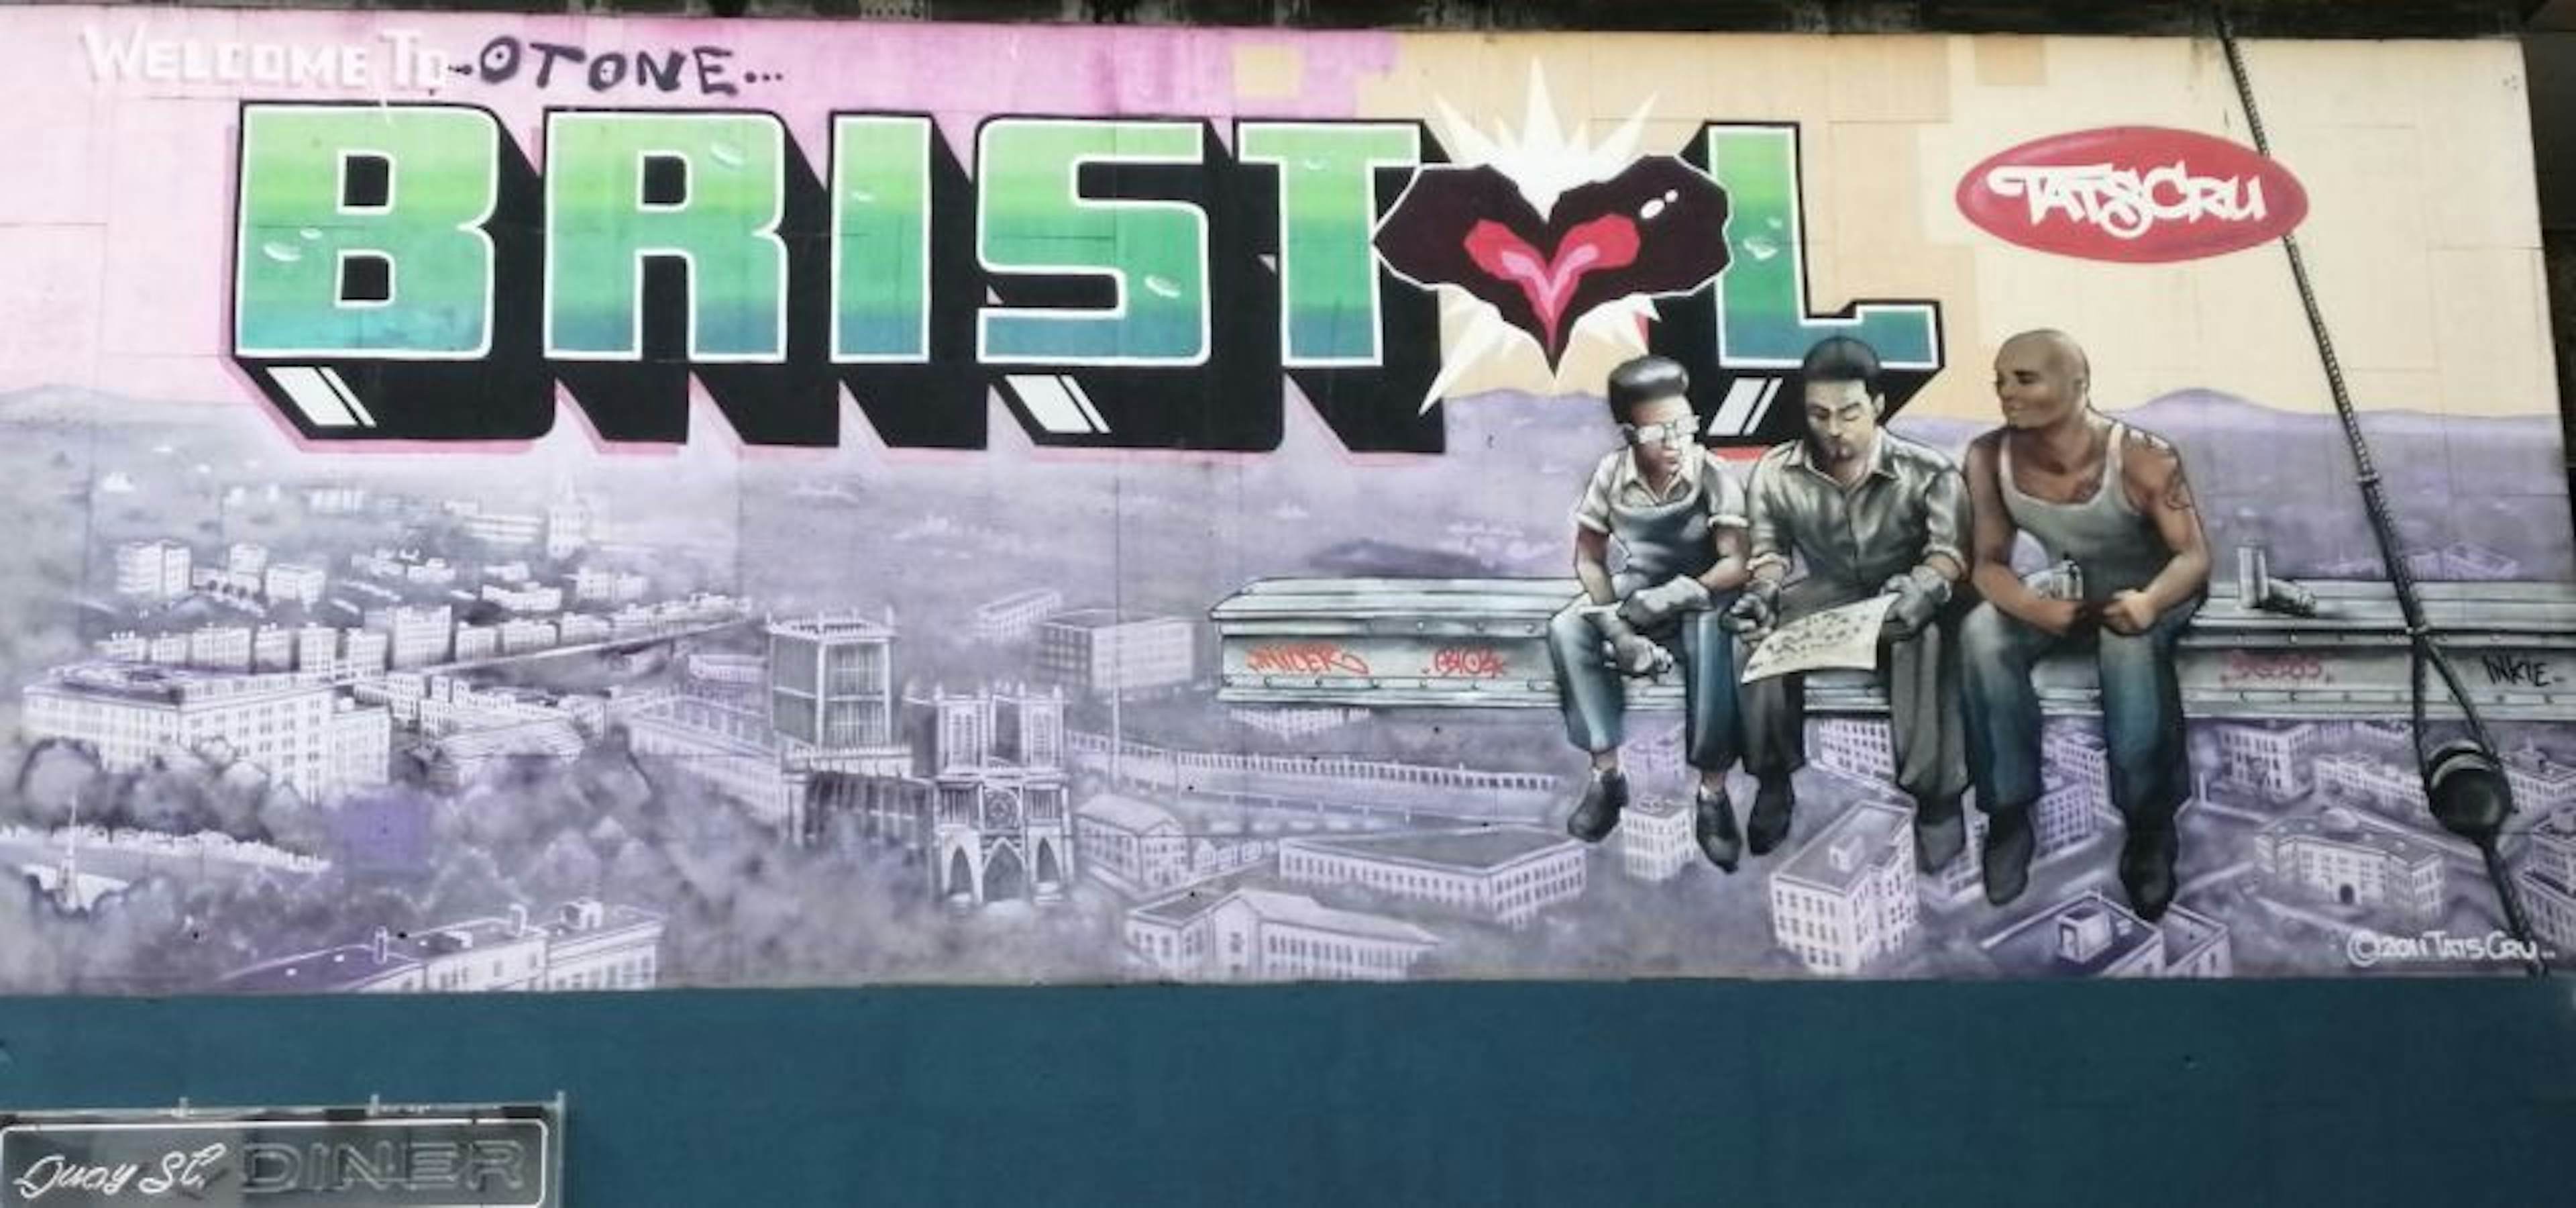 Street Art Bristol: Banksy, A Trip through the Graffiti Capital